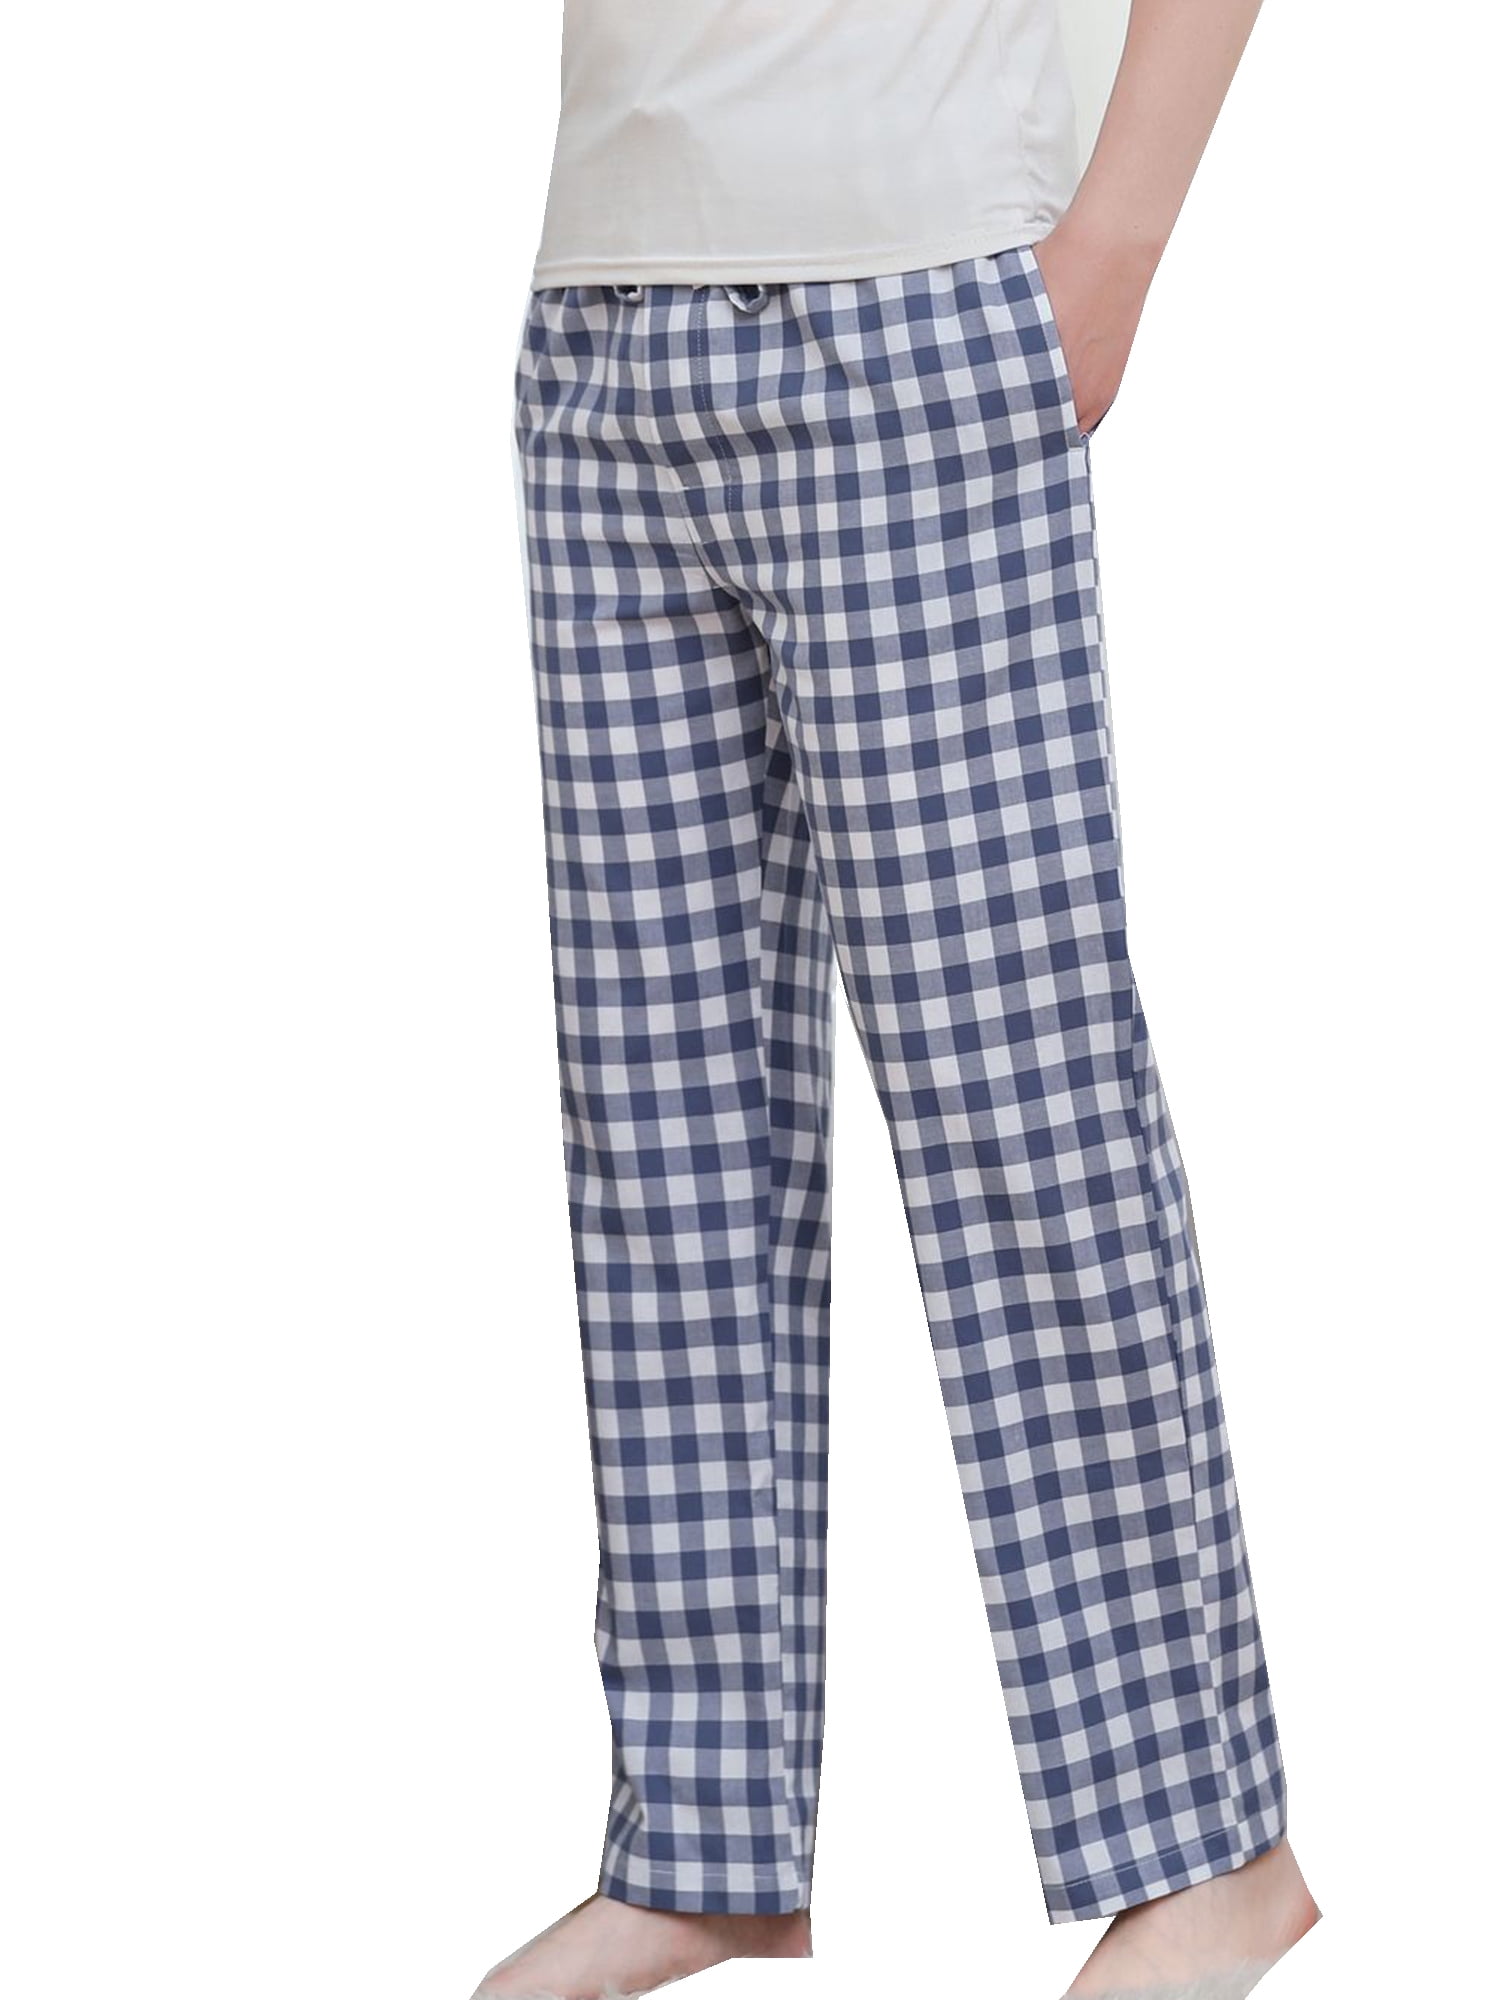 New Mens Pyjamas Lounge Bottoms Pants Nightwear Cotton Checked Tartan Trousers 